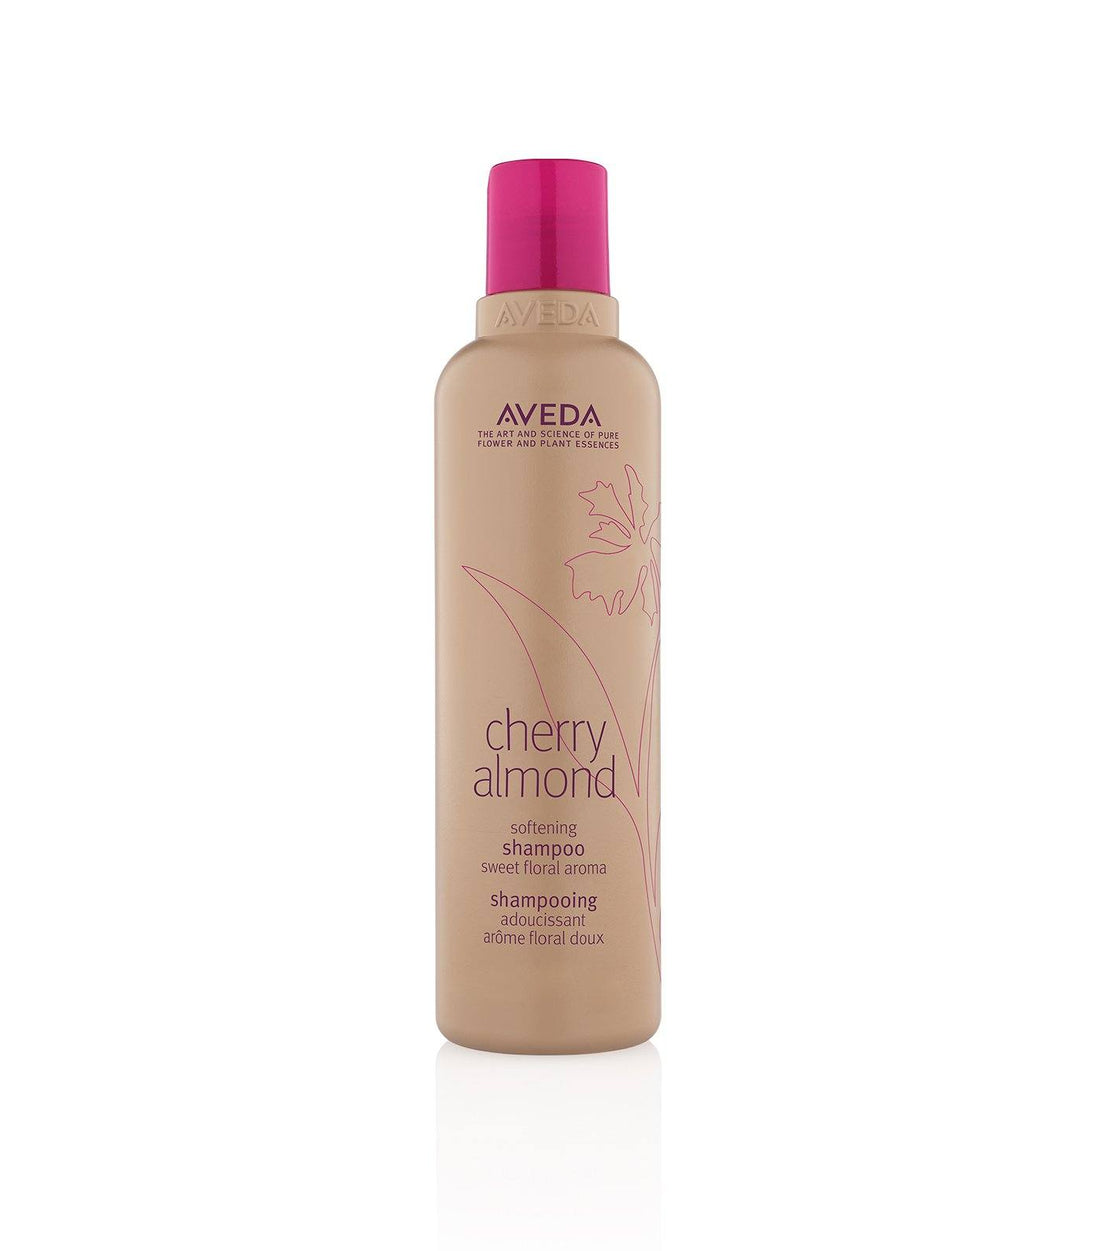 Buy Aveda Cherry Almond Softening Shampoo 250ml on HairMNL